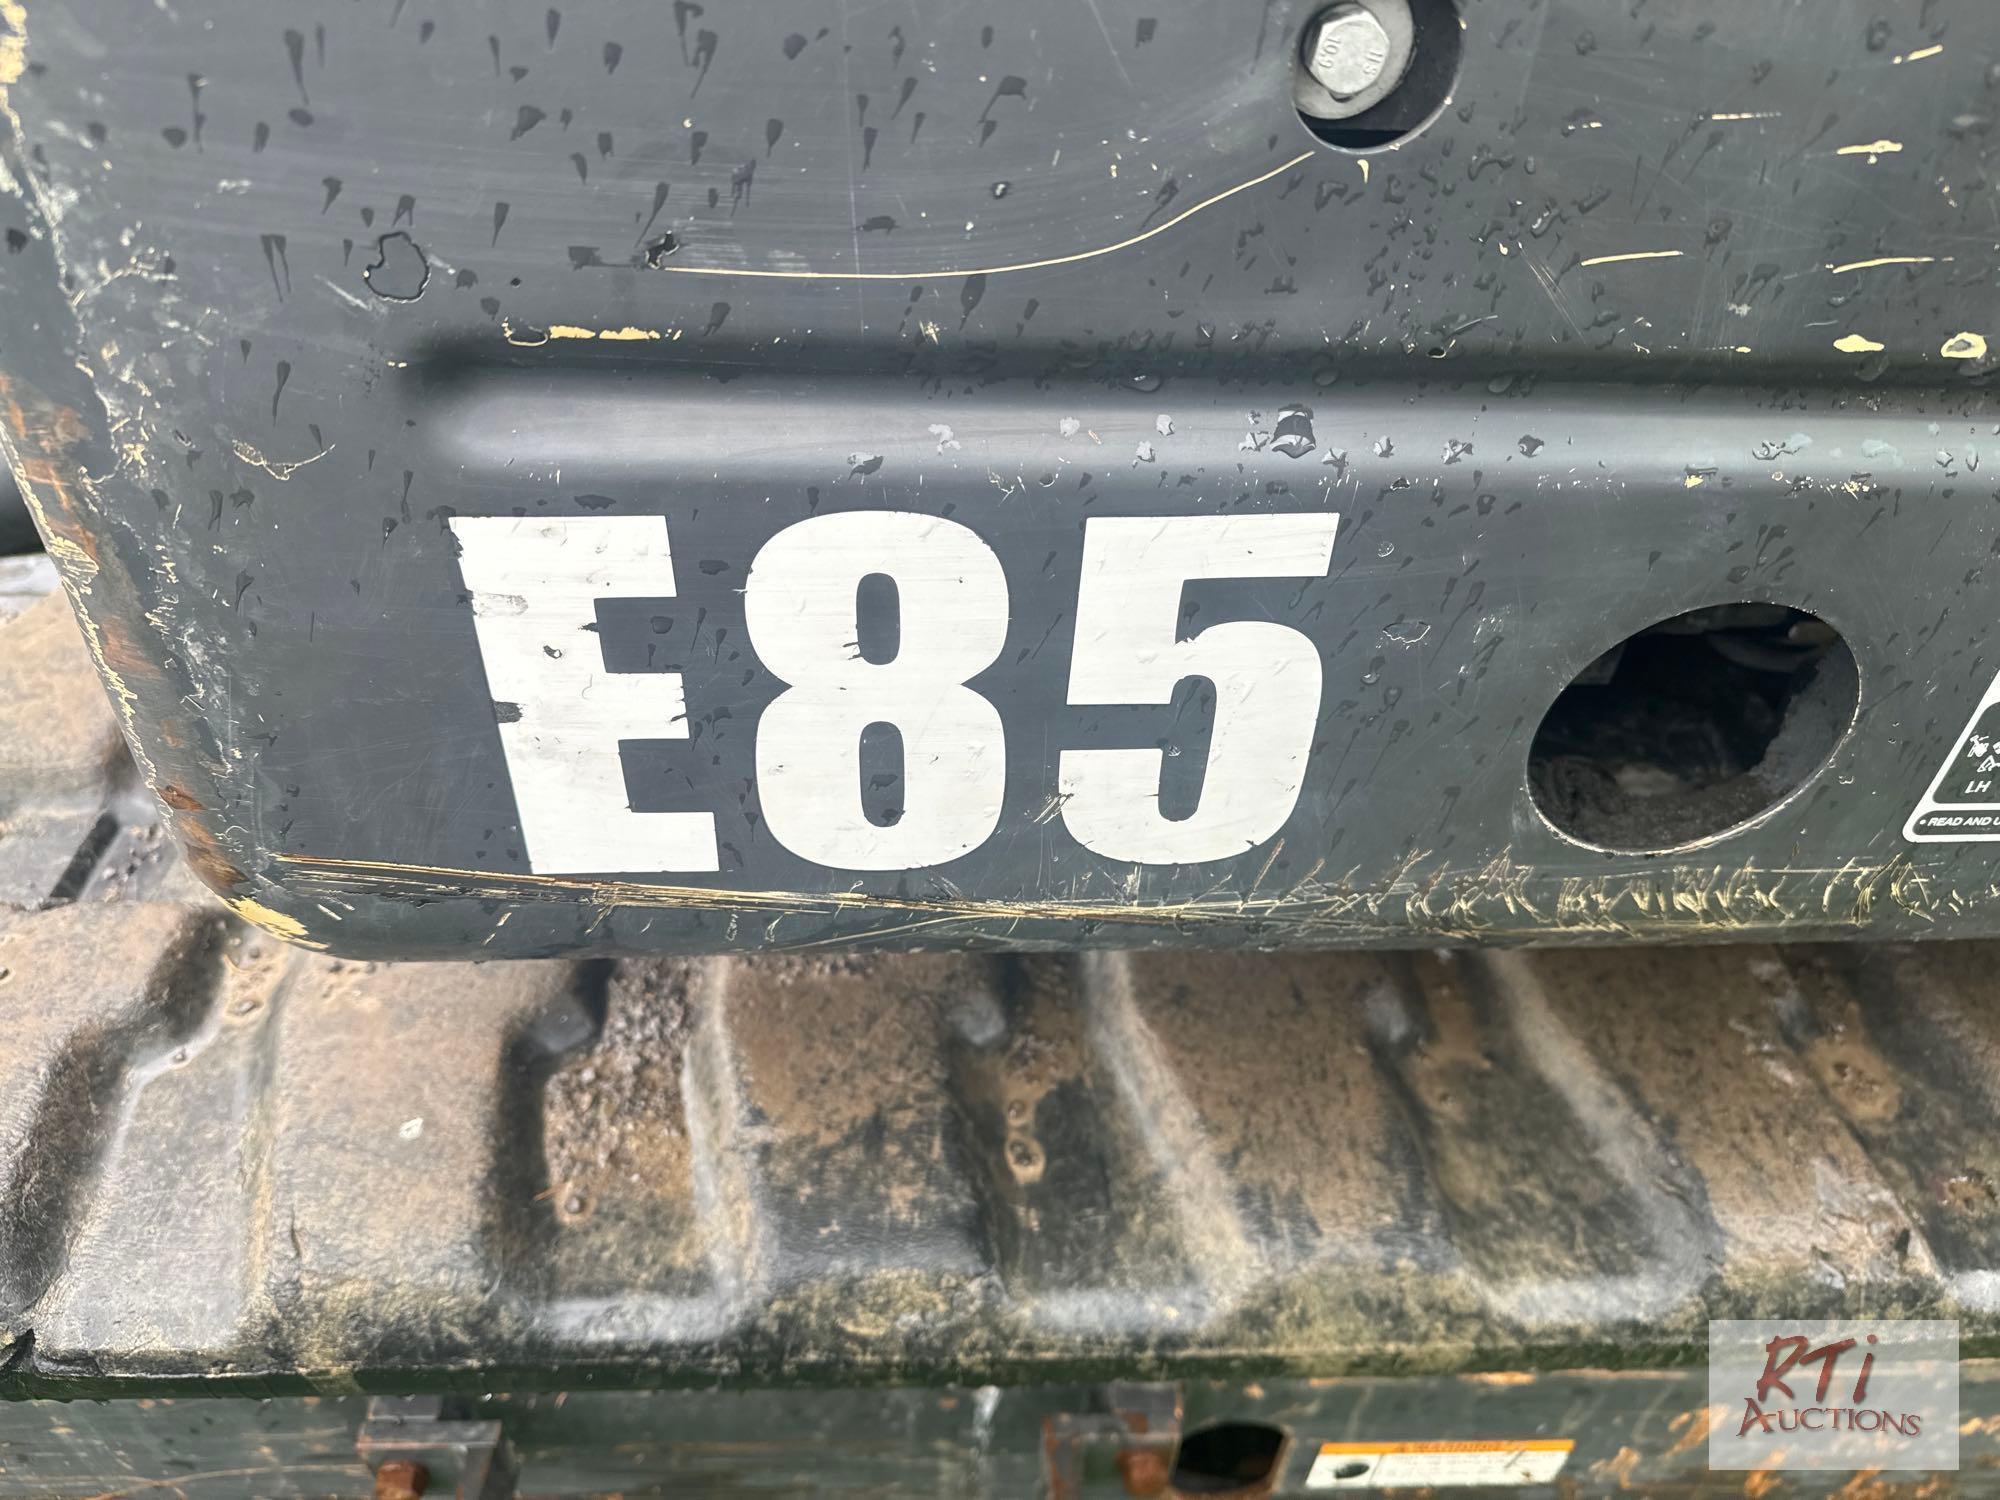 2015 Bobcat E85 excavator, cab, rubber tracks, blade, 24in digging bucket, 1103 hrs